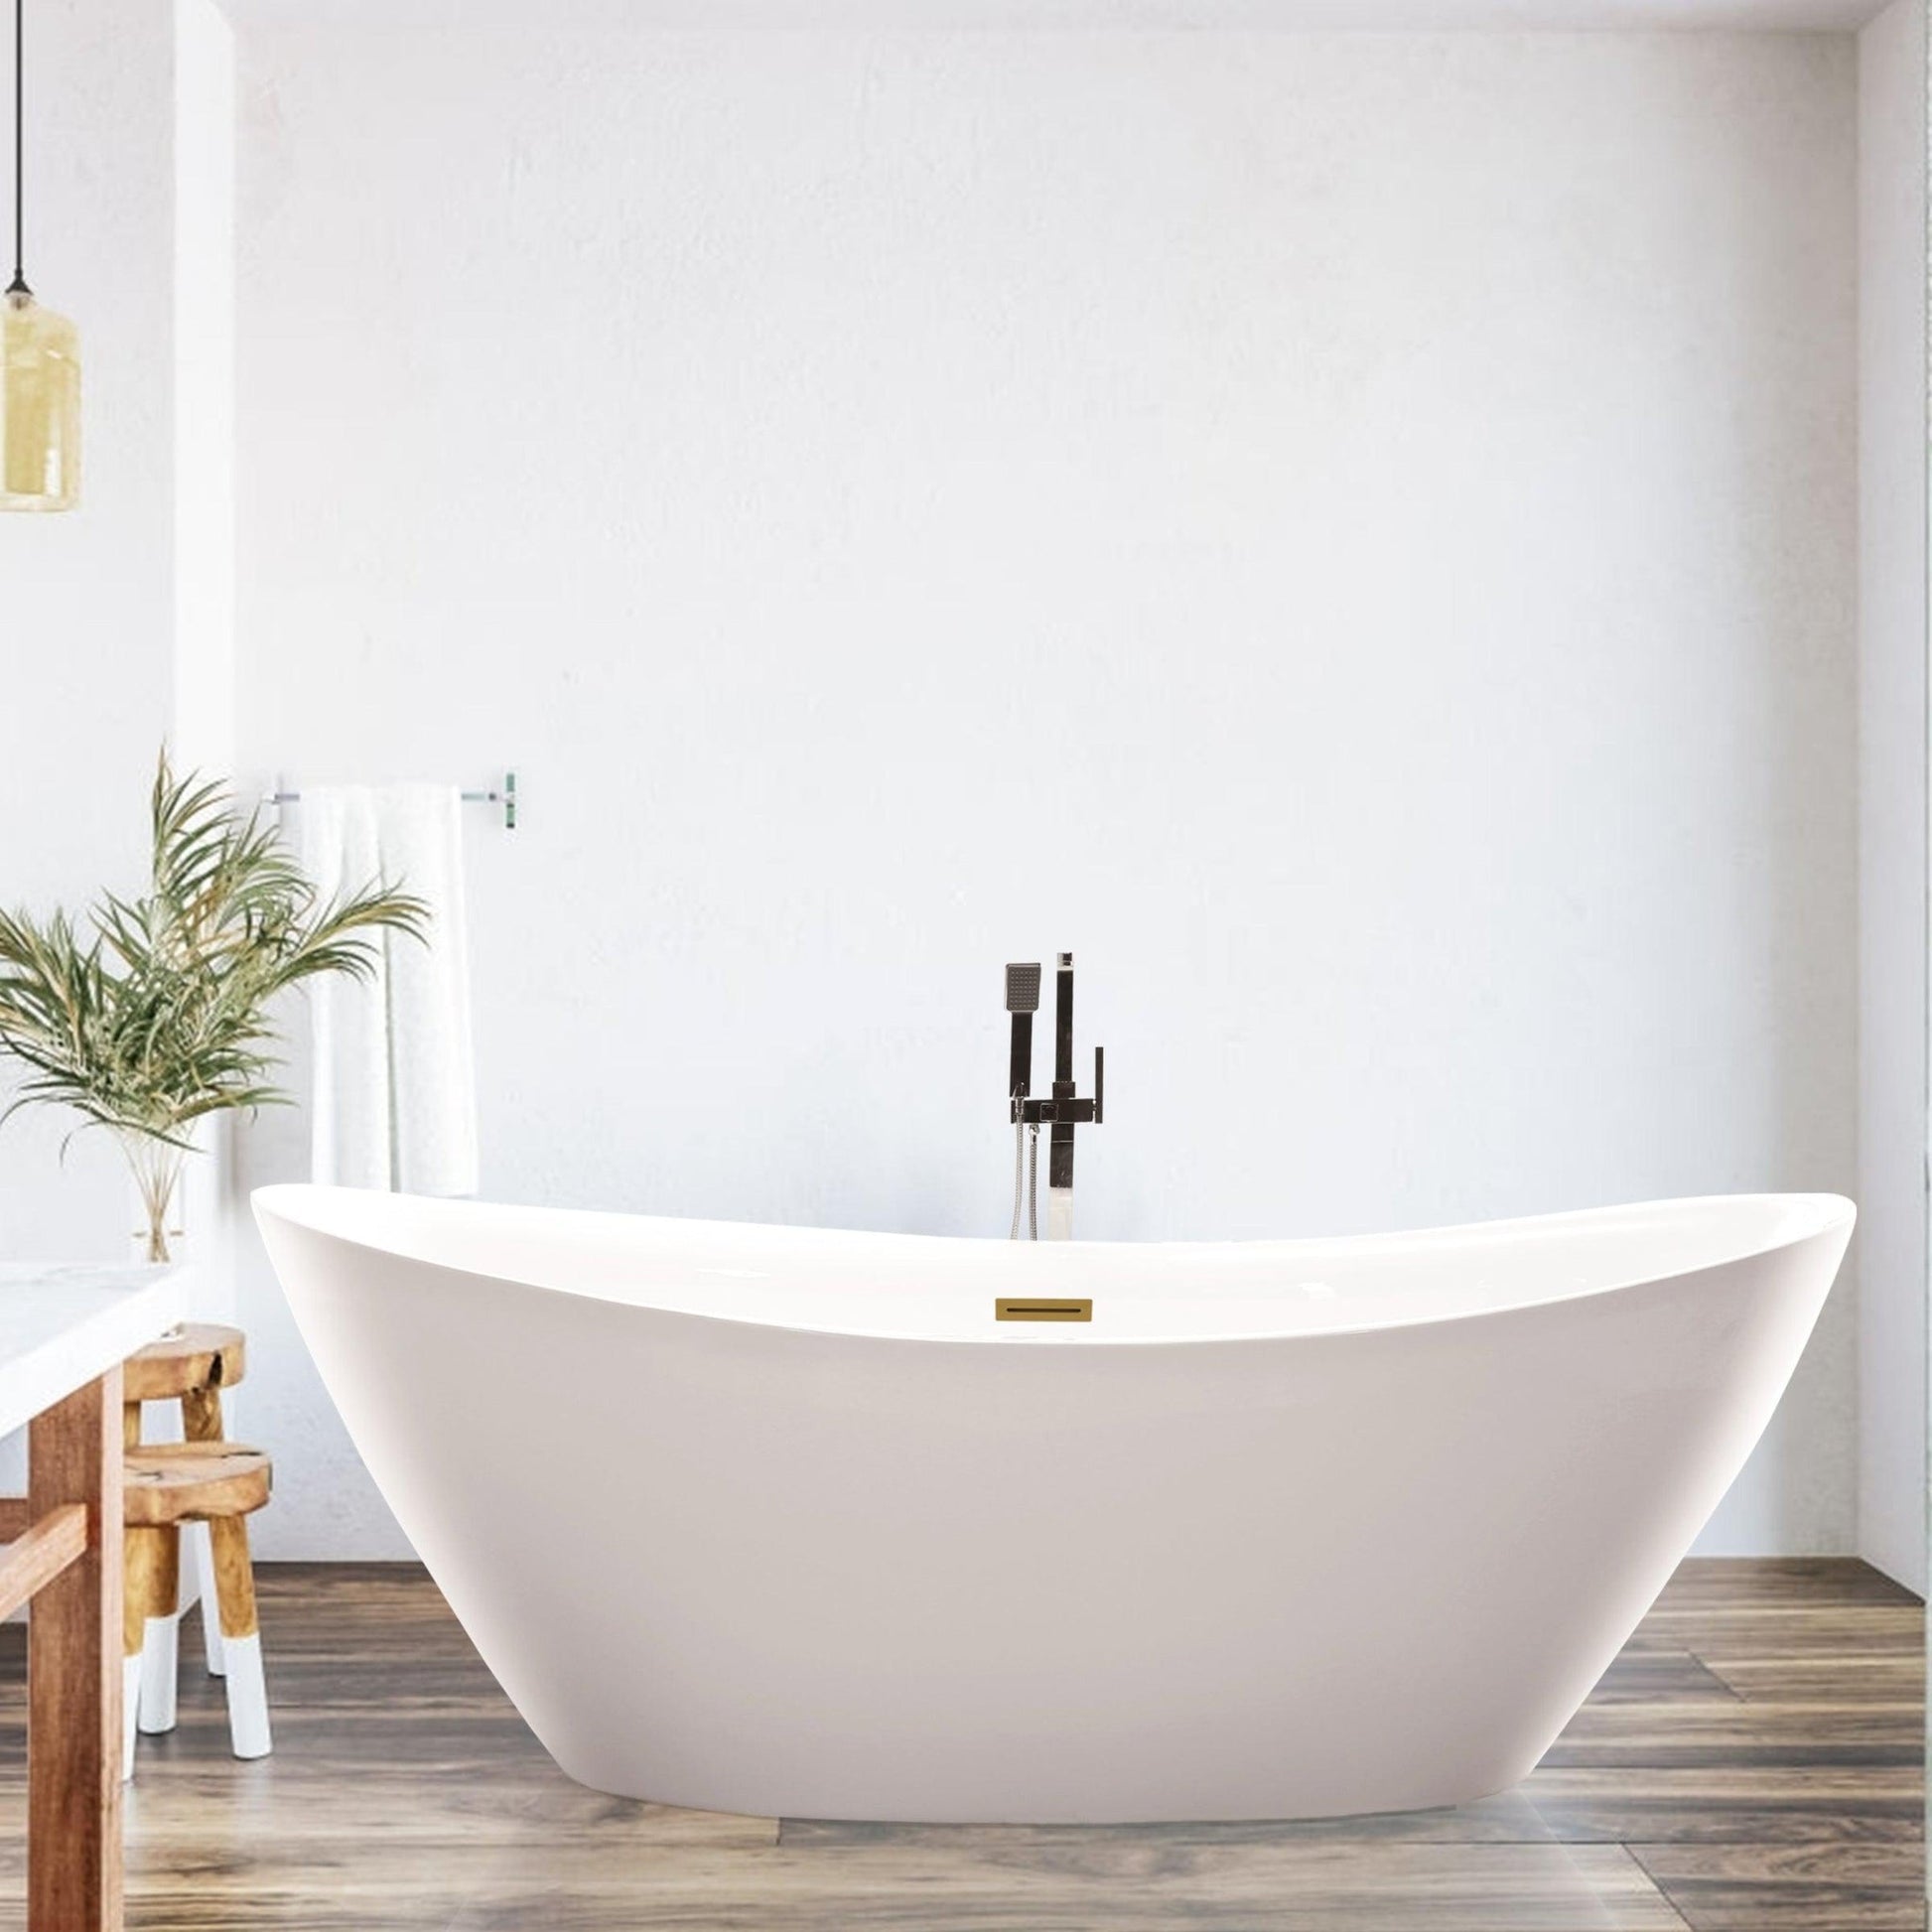 Vanity Art 71" W x 26" H White Acrylic Non-Slip Oval Freestanding Bathtub With Titanium Gold Pop-up Drain, Overflow and Flexible Drain Hose